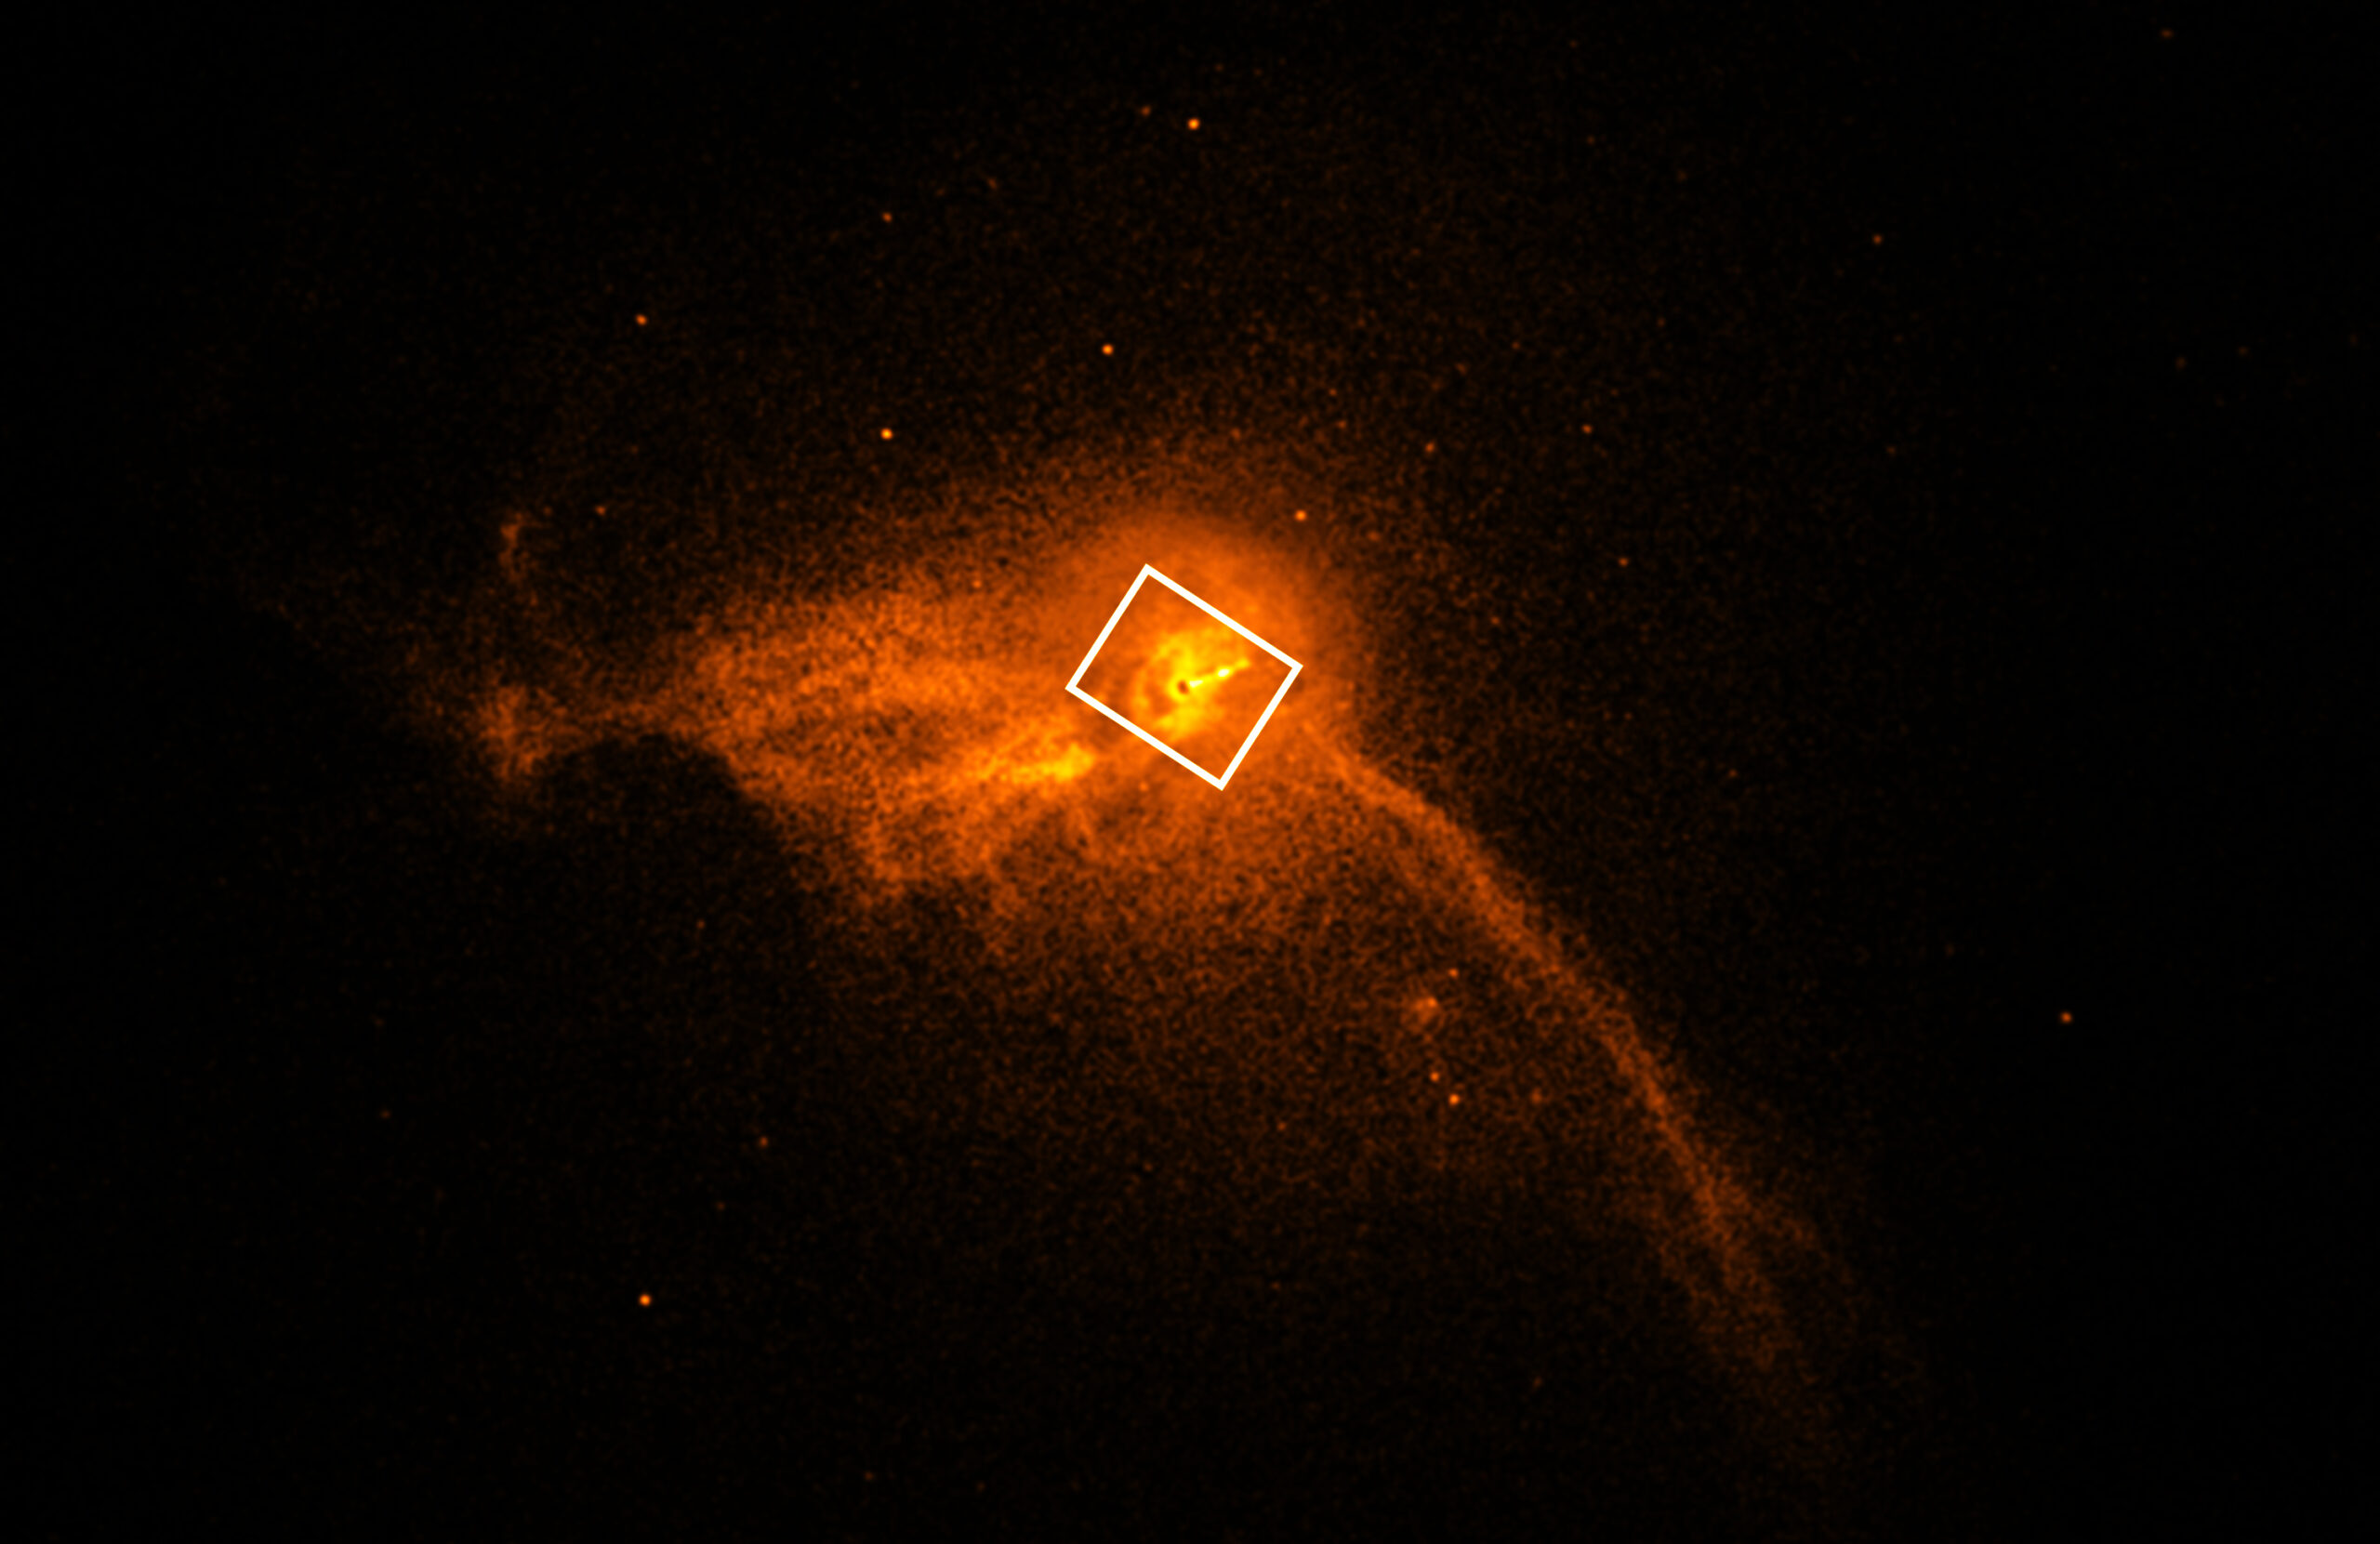 M87 galaxy with black hole